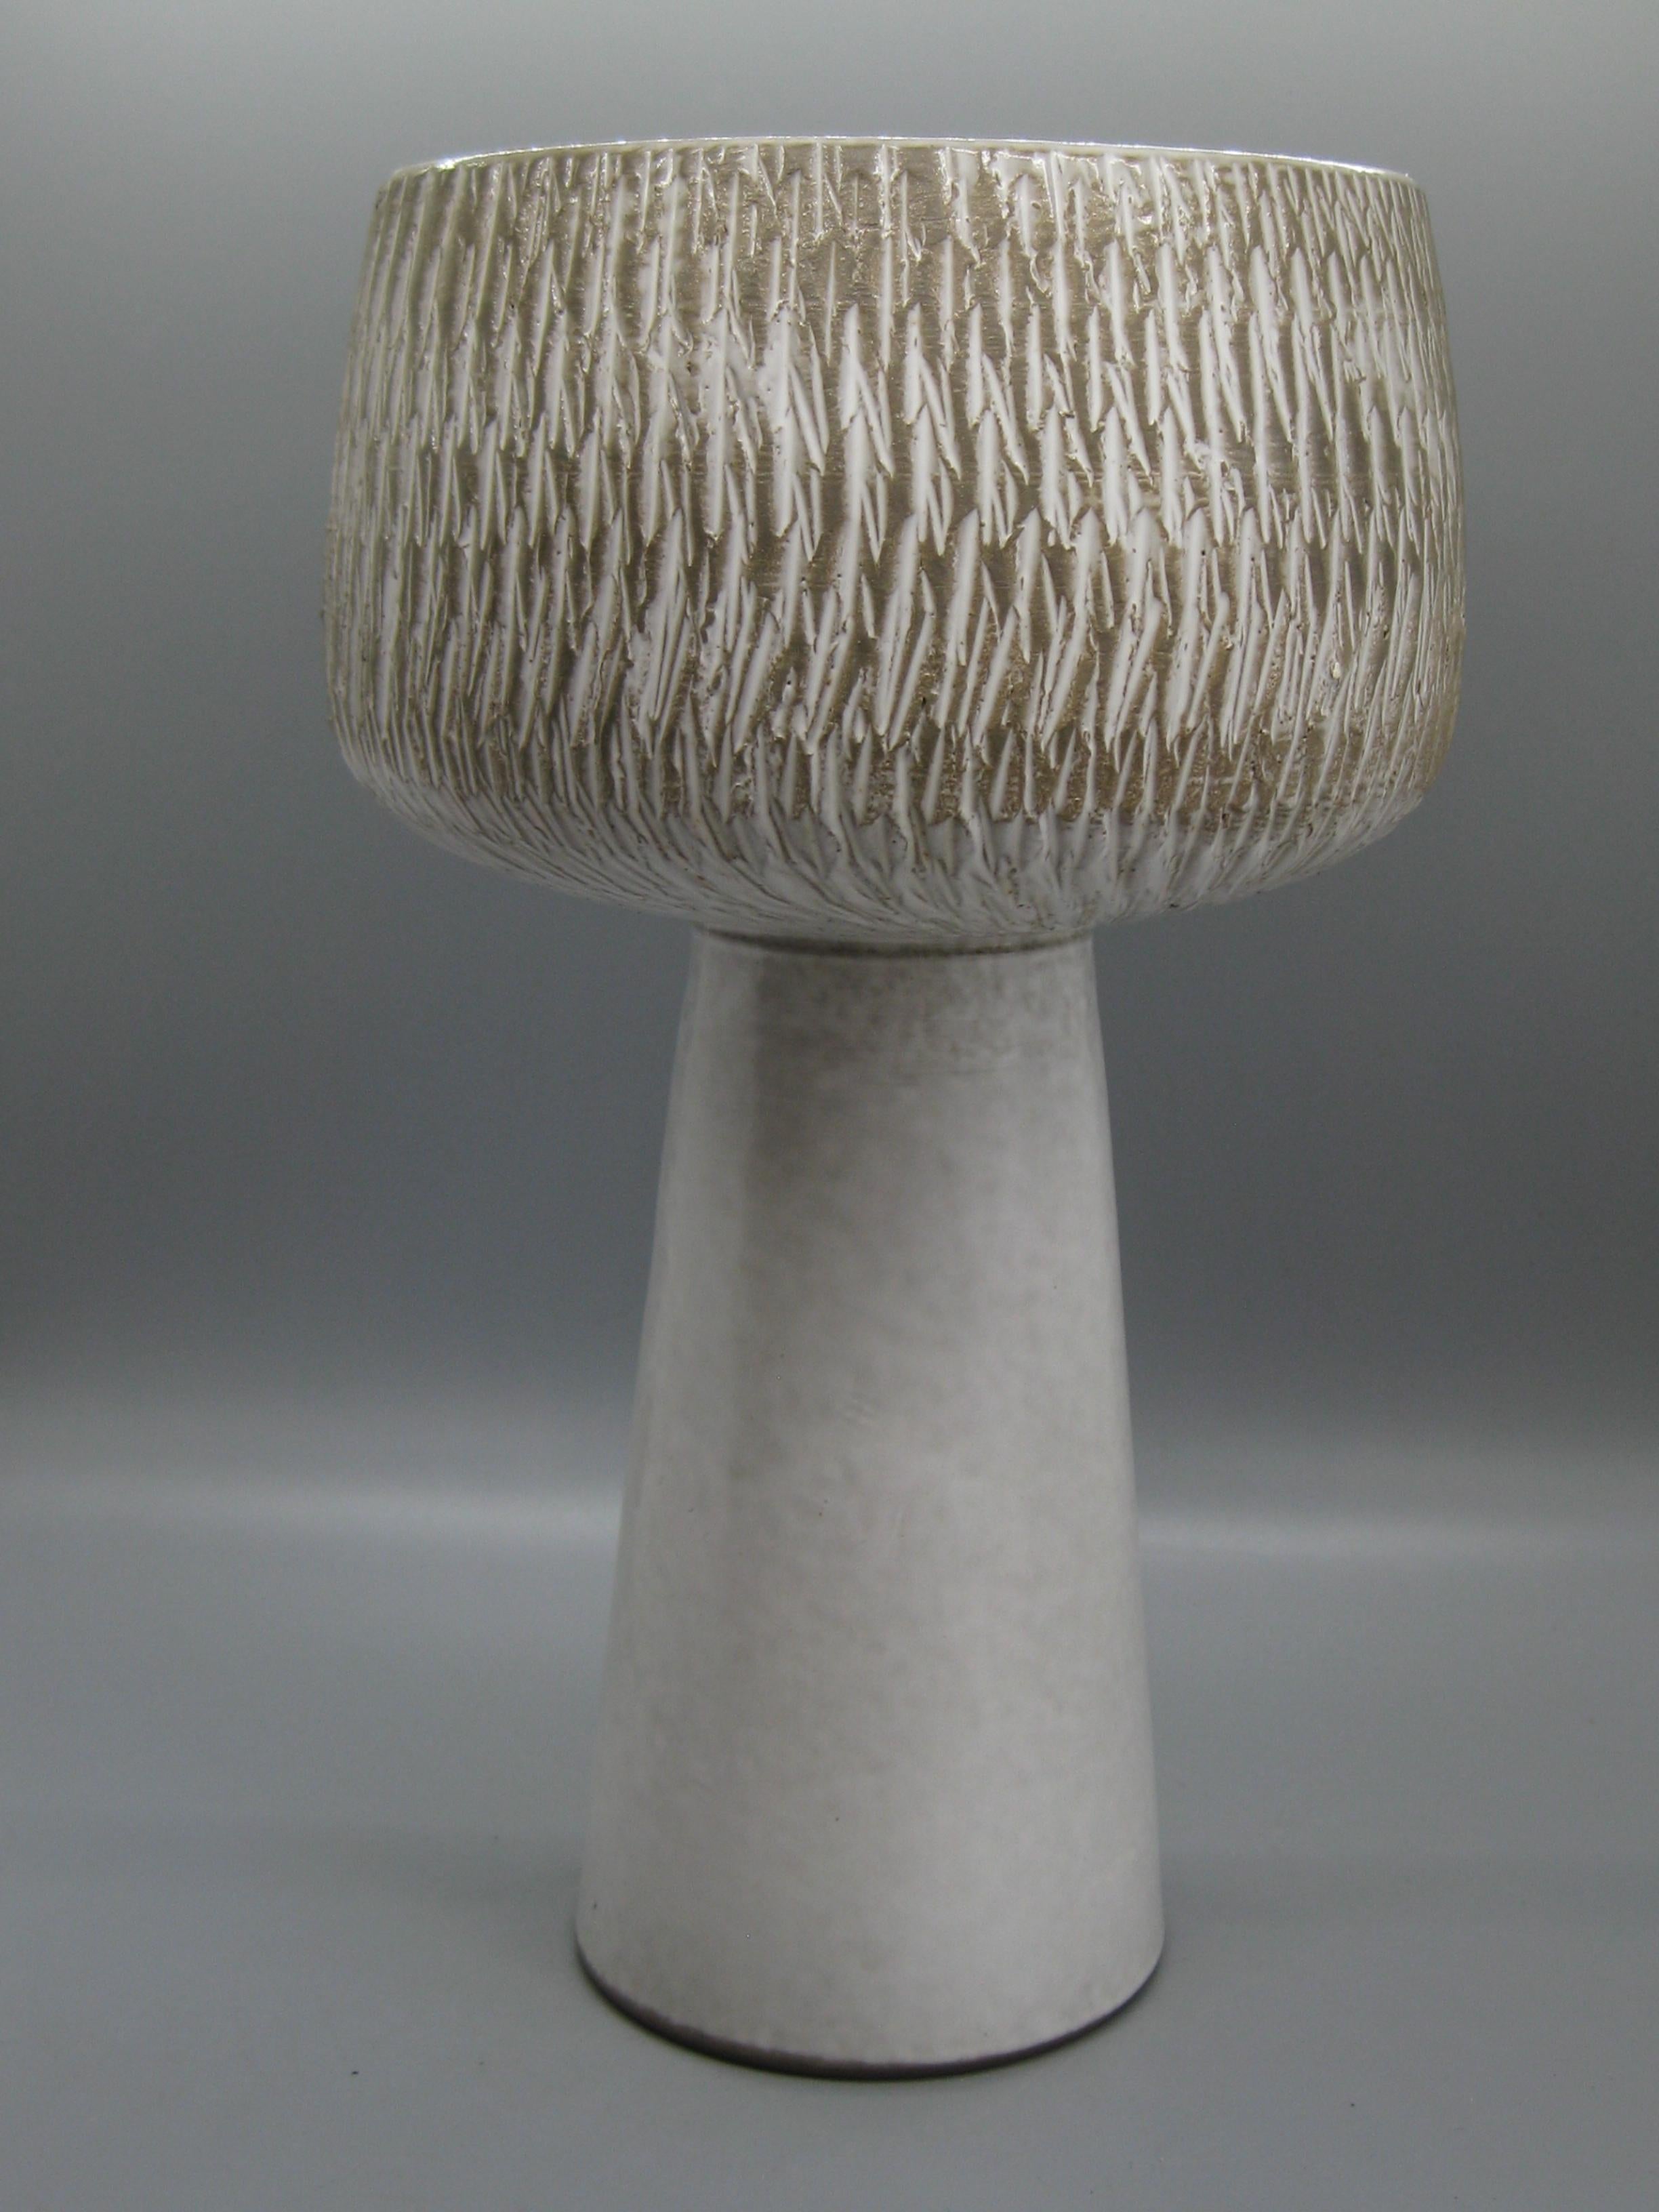 1960s Japanese Modernist Ikebana Ceramic Pottery Sgraffito Pedestal Vase Vessel For Sale 2